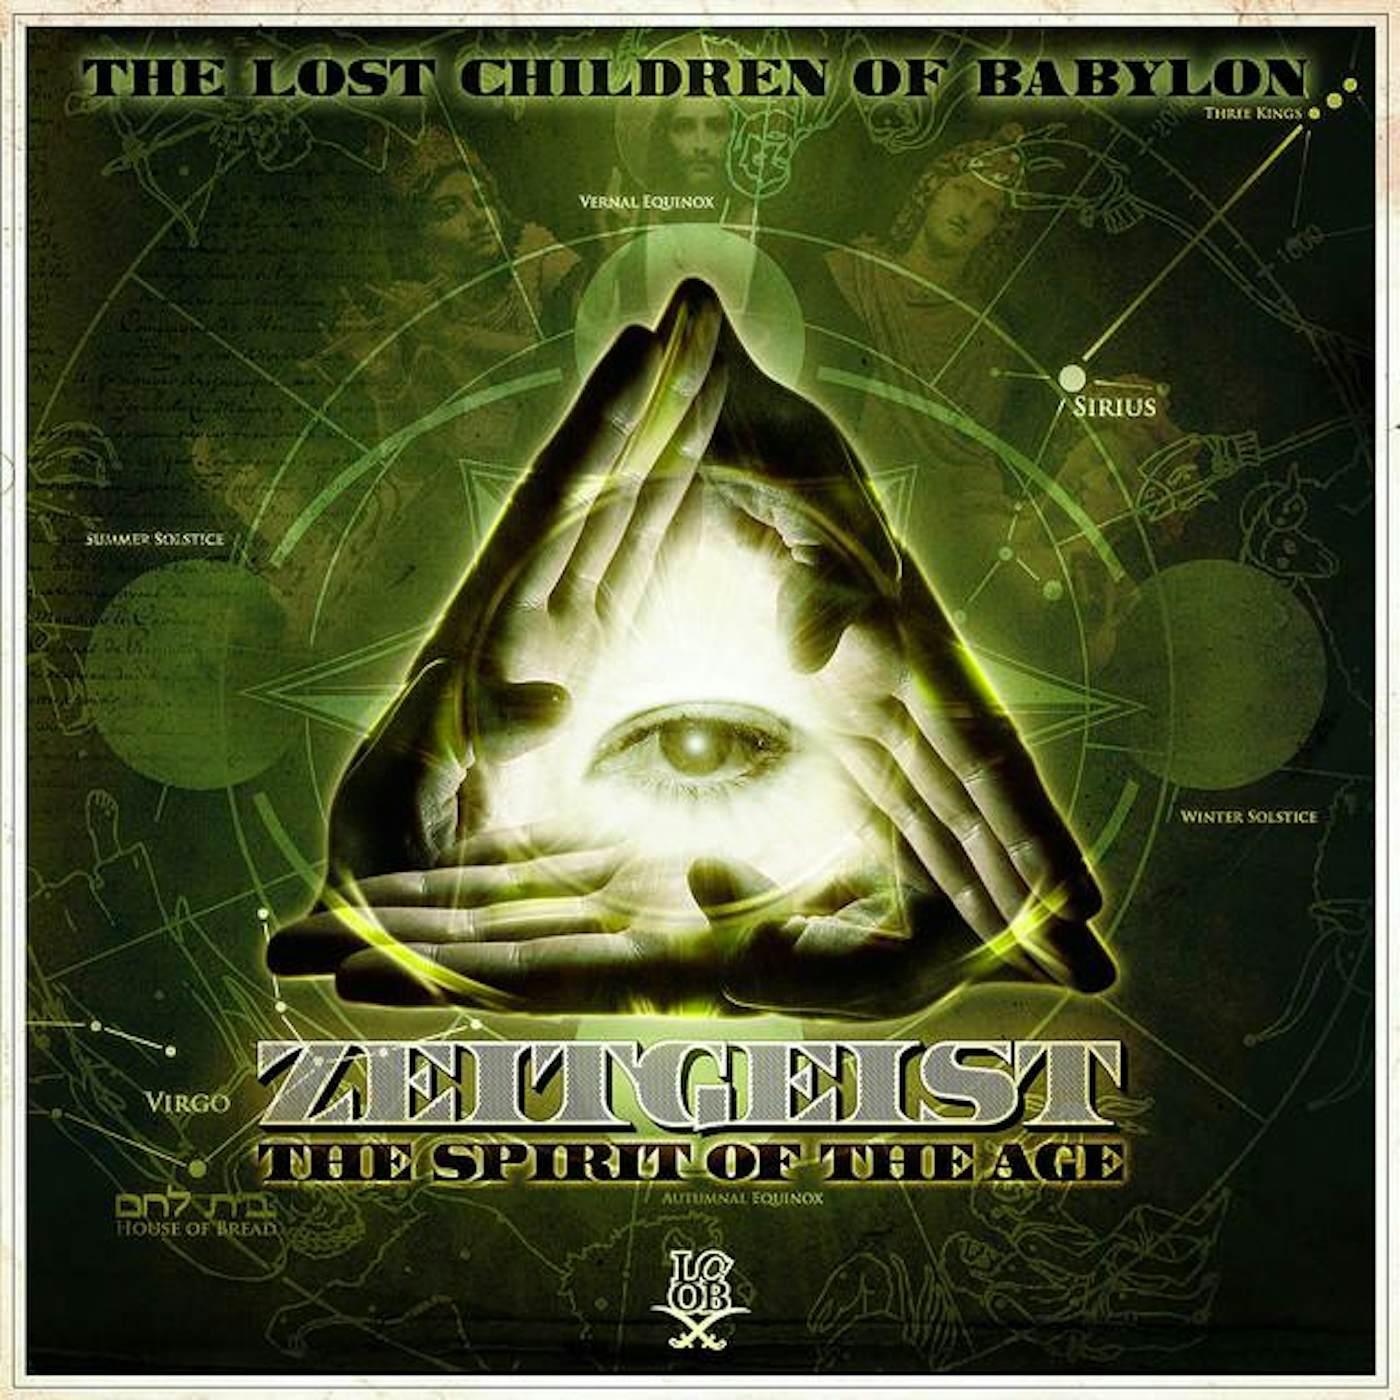 The Lost Children of Babylon